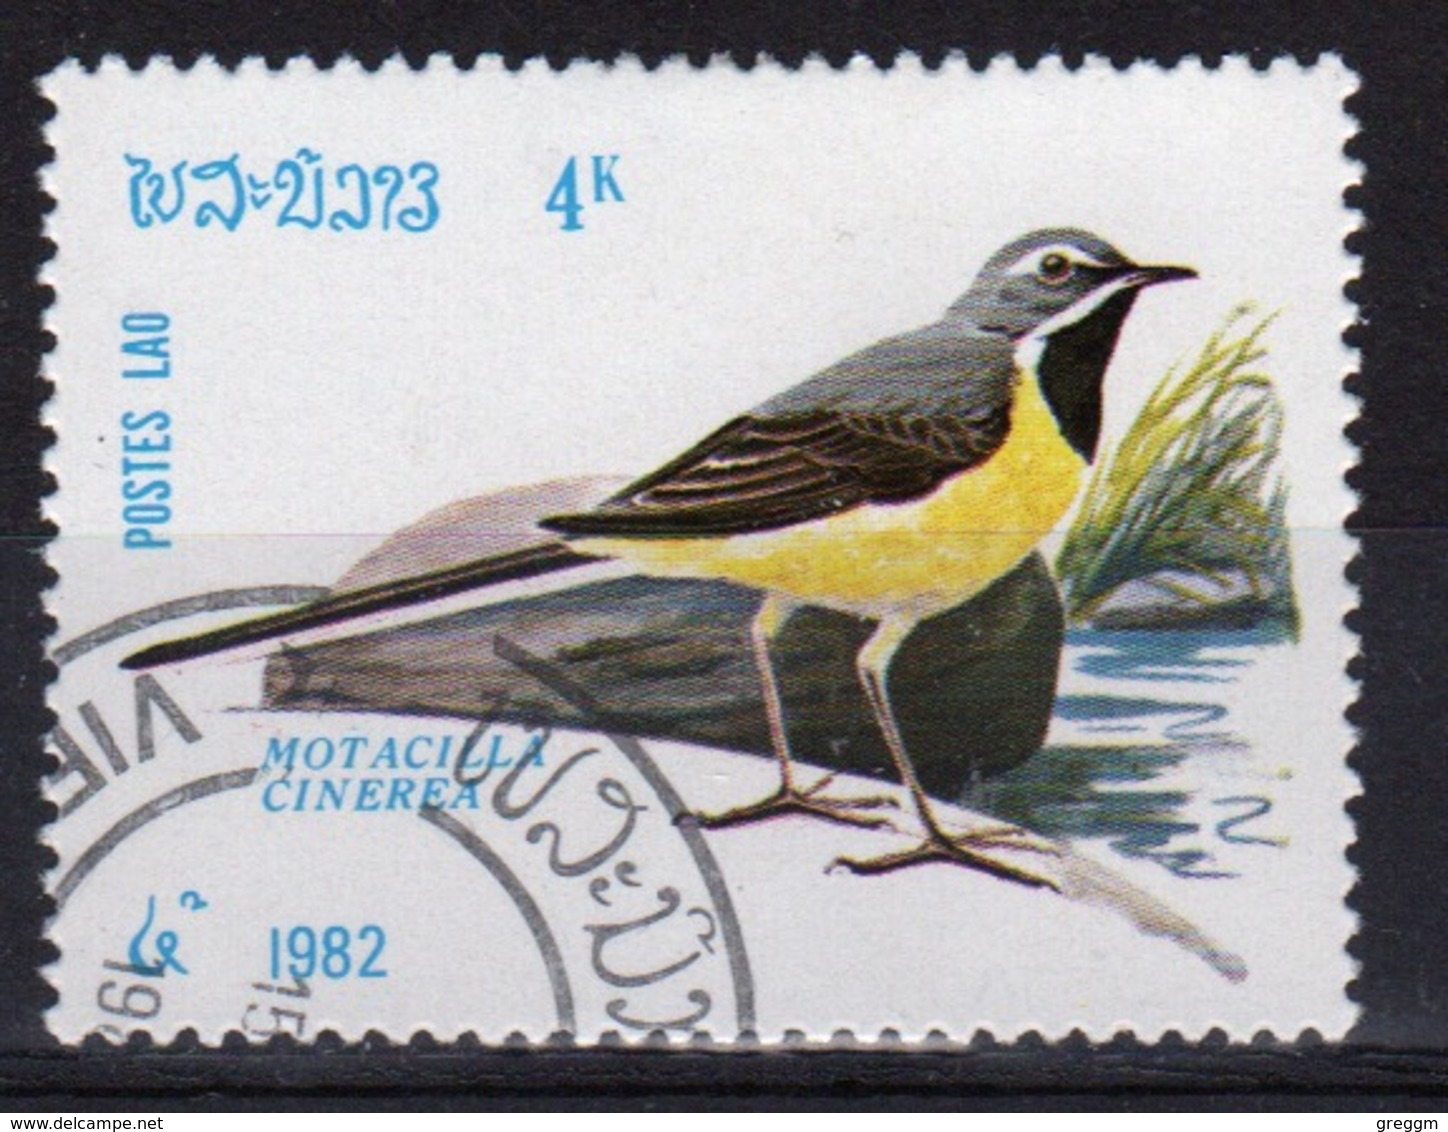 Laos 1982 Single 4k Stamp From The Birds Set. - Laos